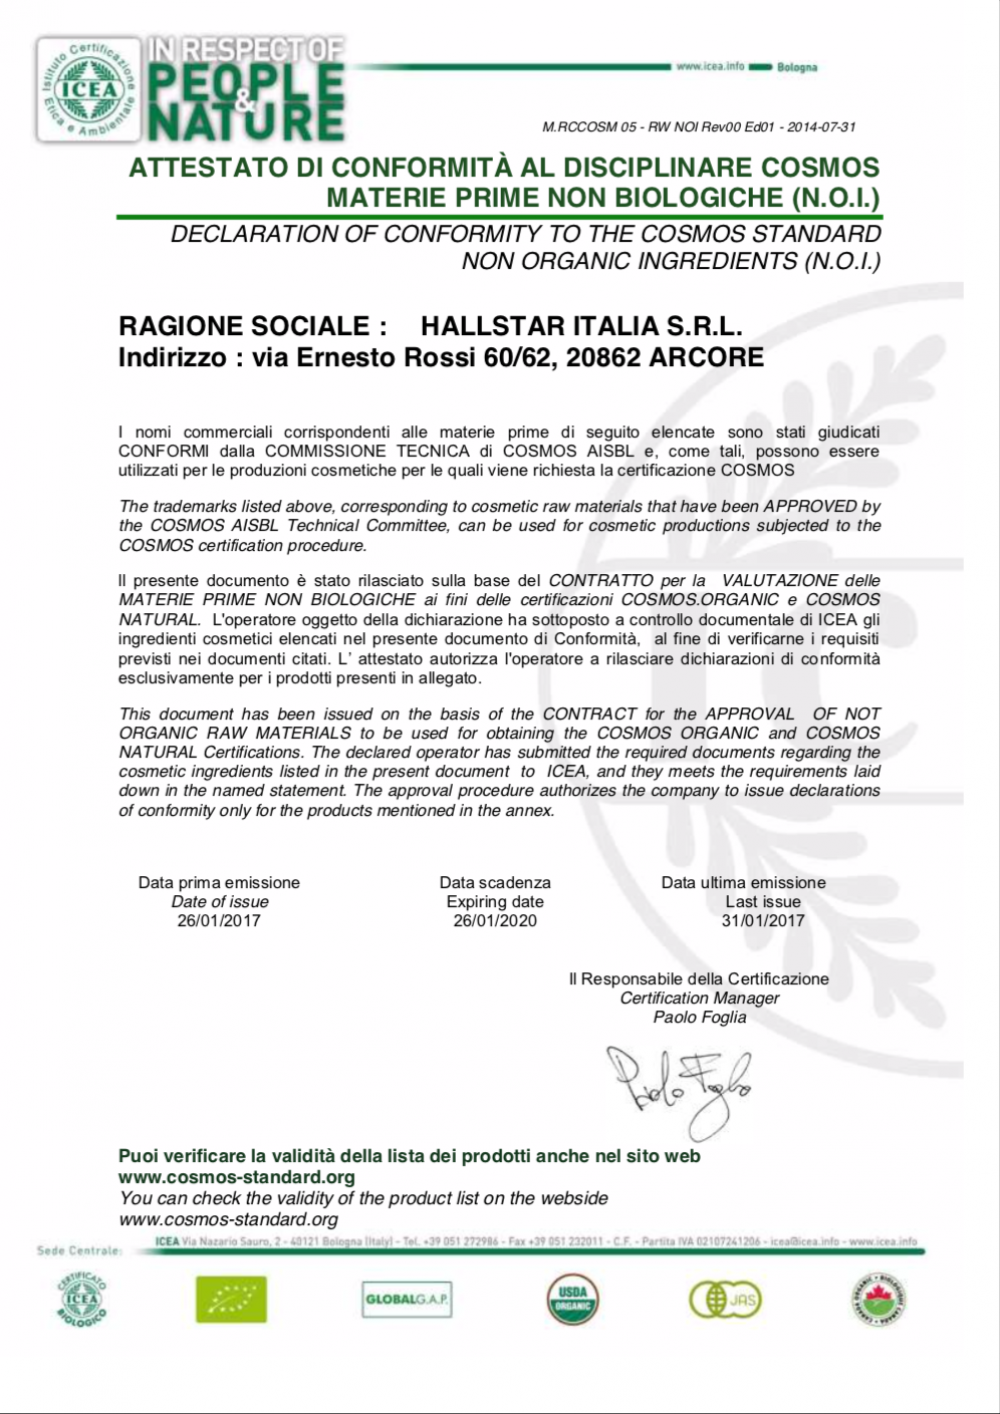 COSMOS approval - Hallstar Italia product_20200126